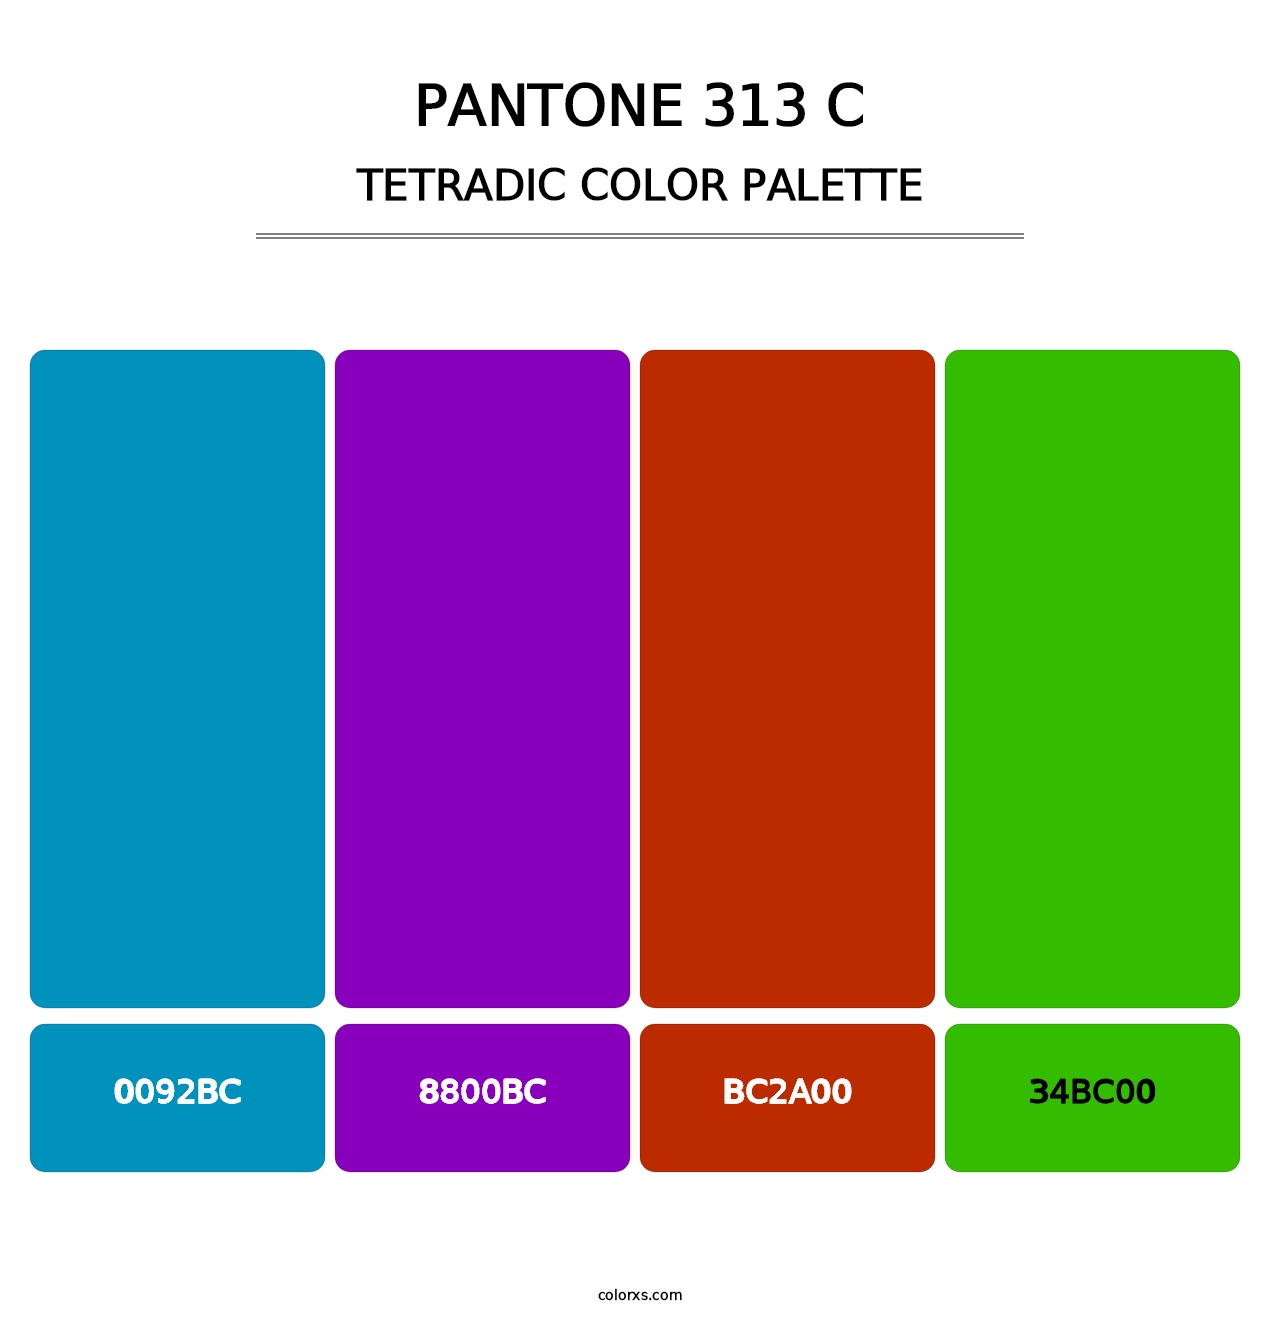 PANTONE 313 C - Tetradic Color Palette